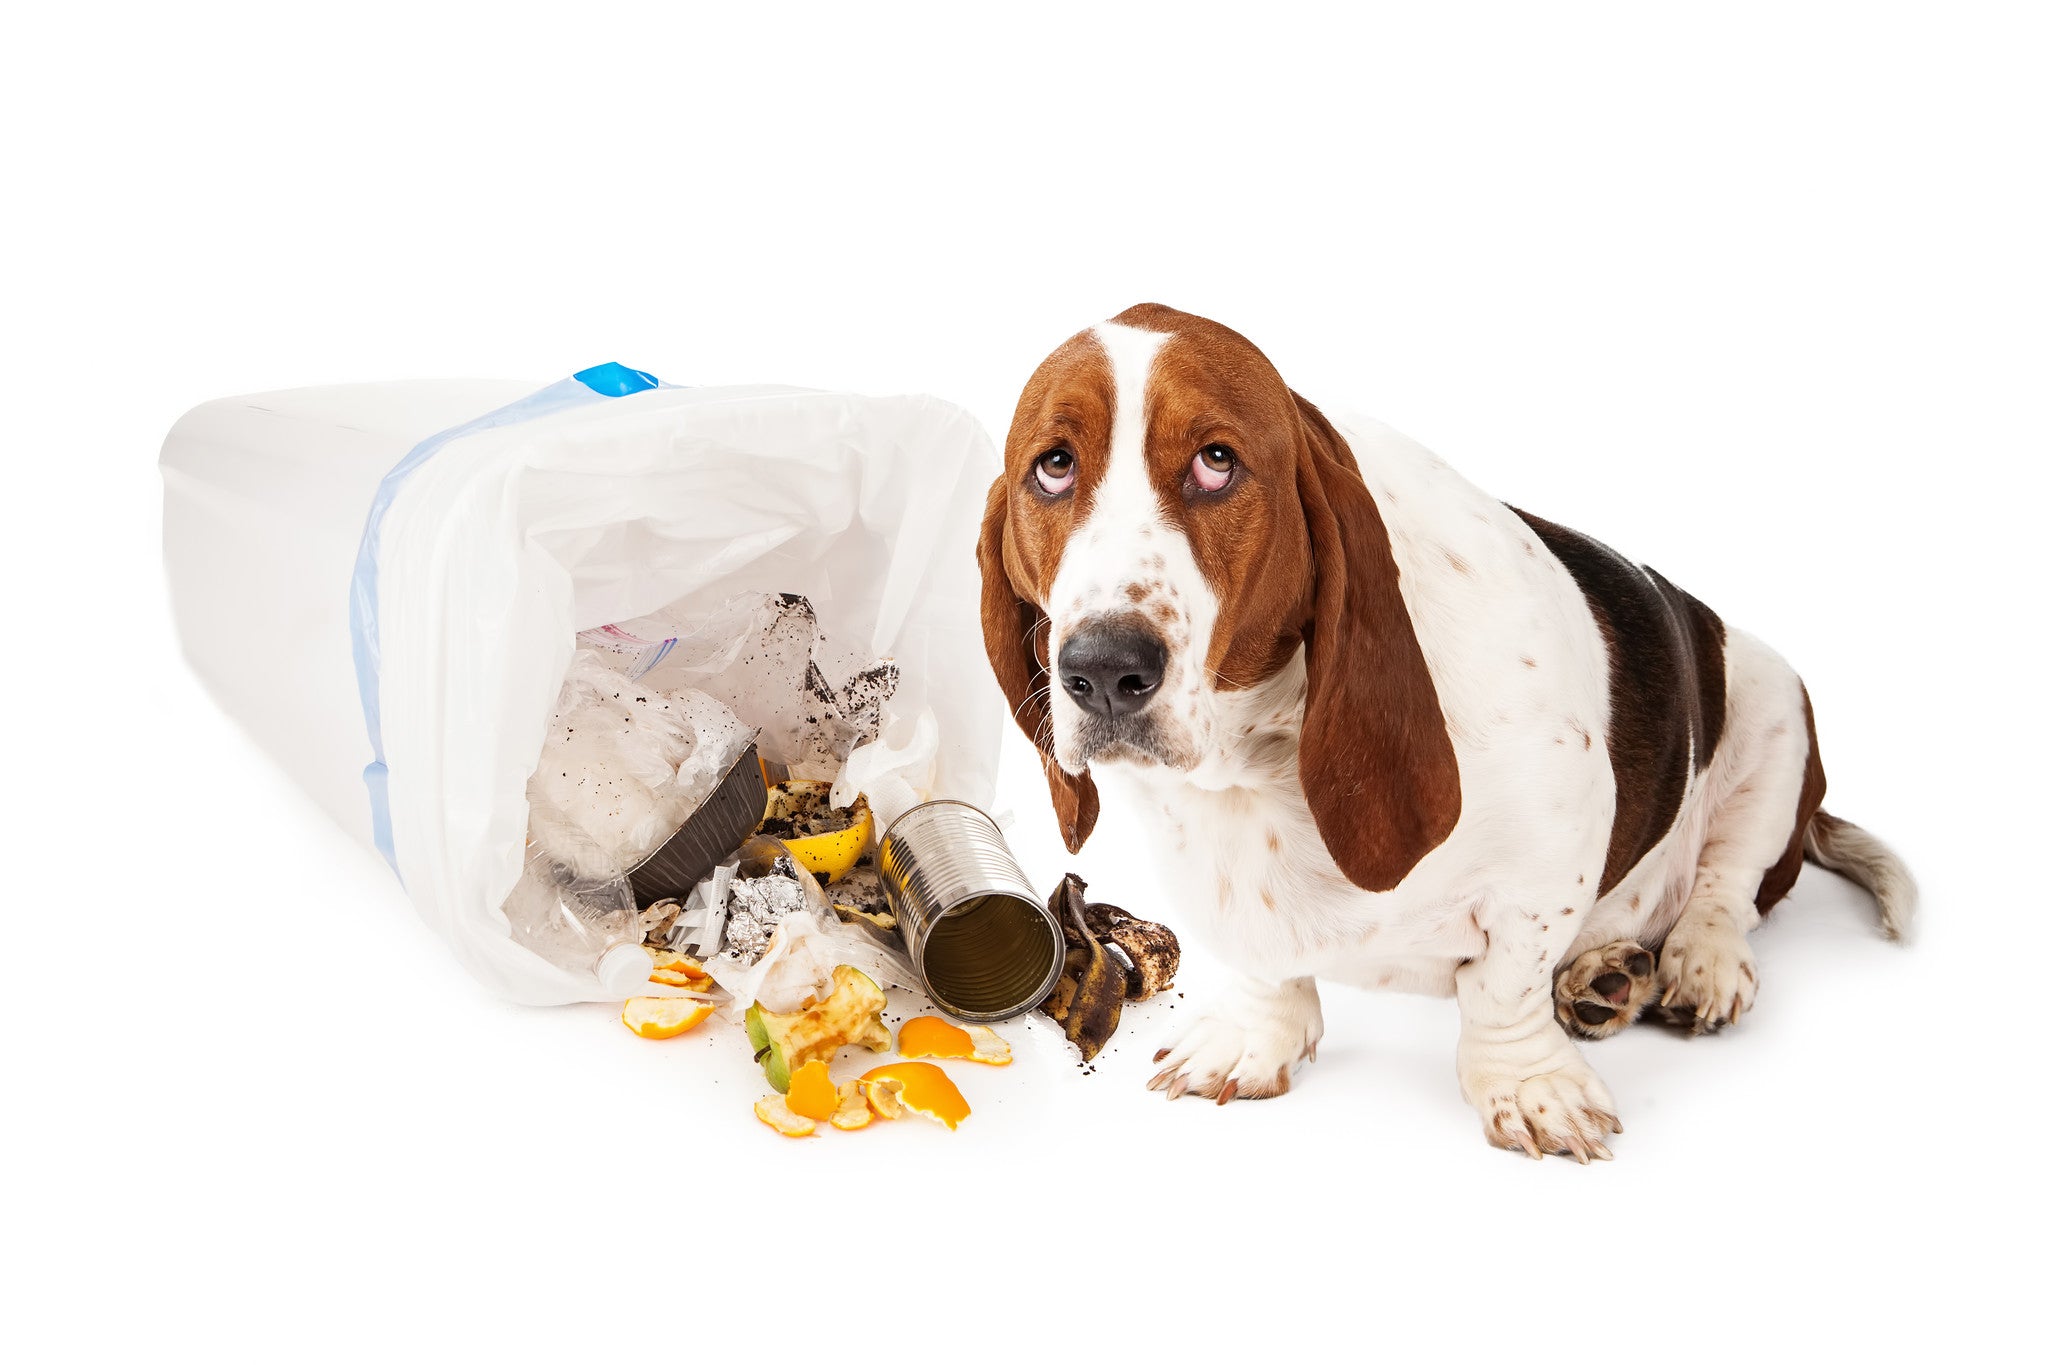 Sad dog looking at a bag of overturned rubbish